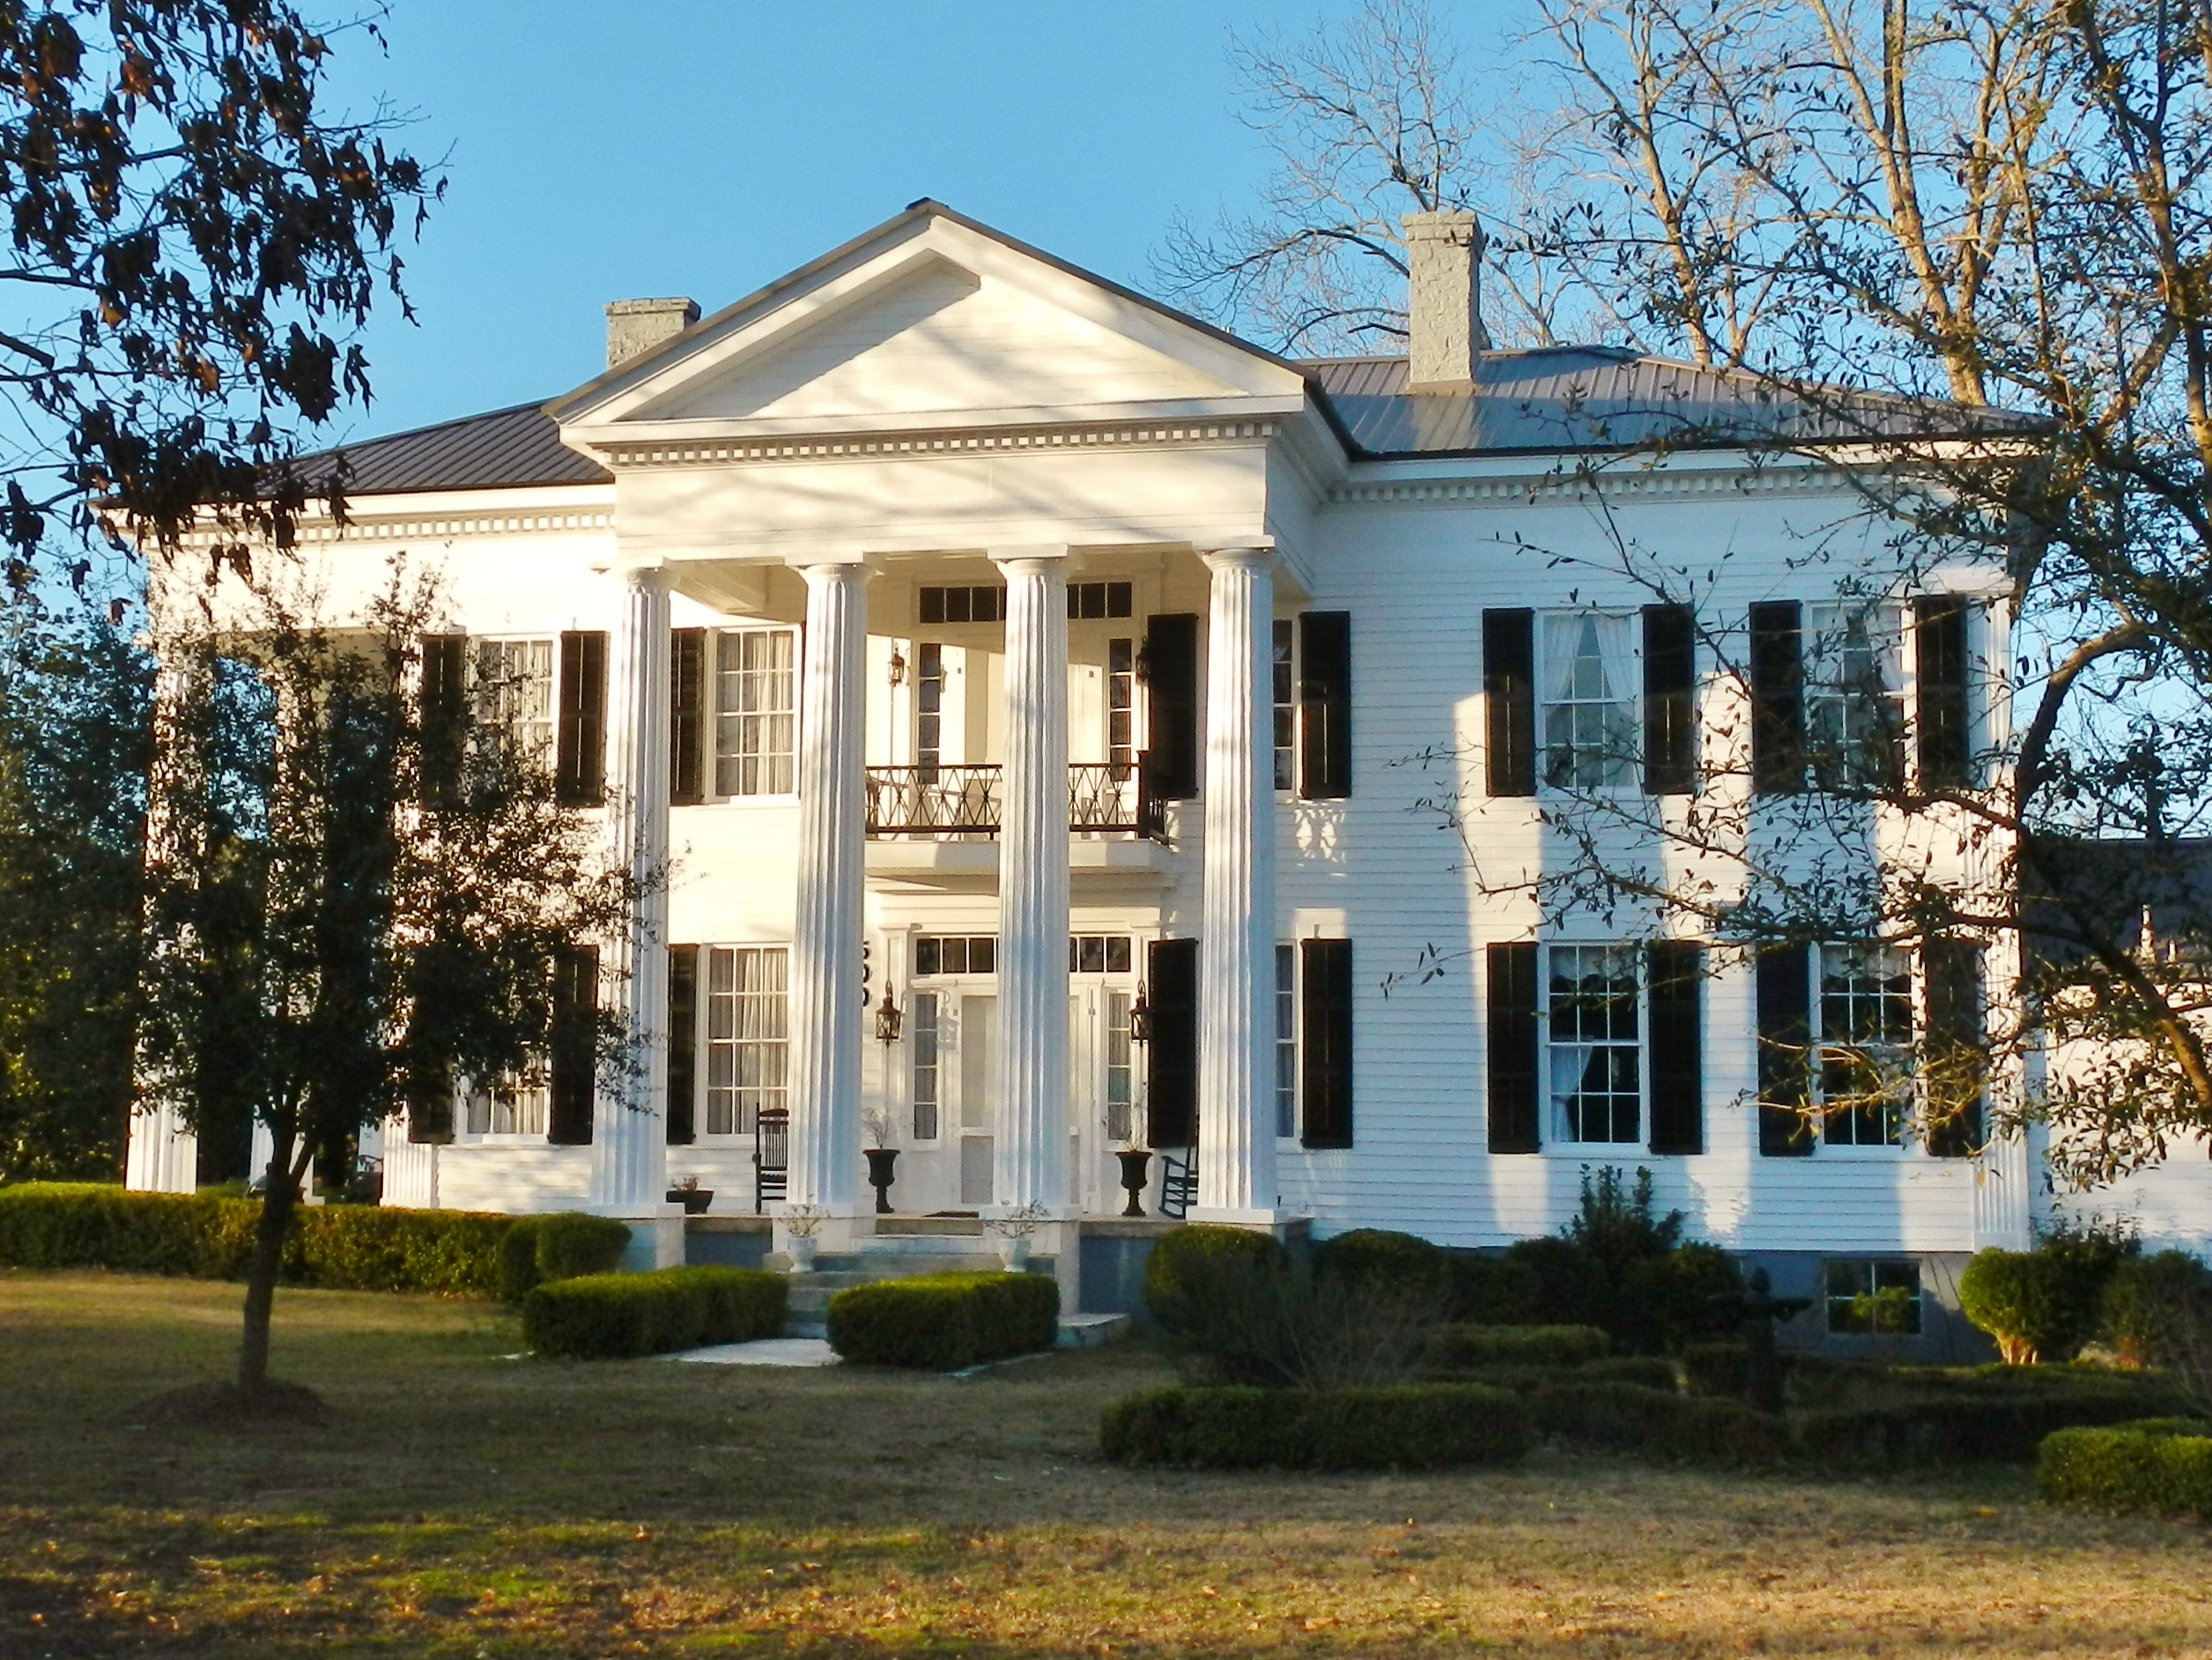 The Pillars Plantation Home in Lowdesboro Alabama